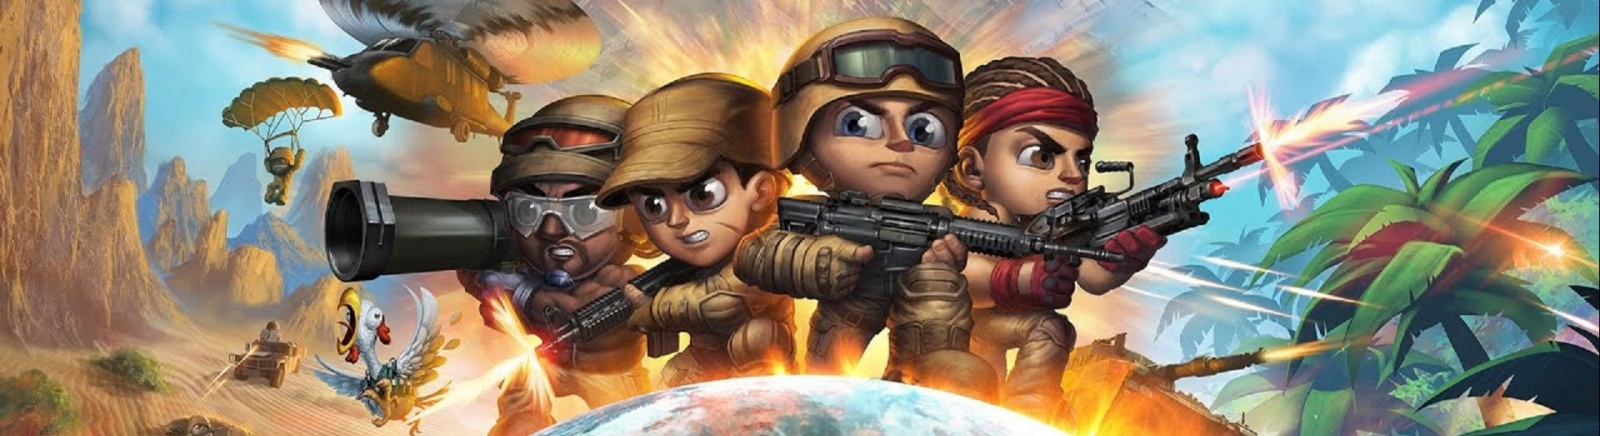 Дата выхода Tiny Troopers: Global Ops  на PC, PS5 и Xbox Series X/S в России и во всем мире